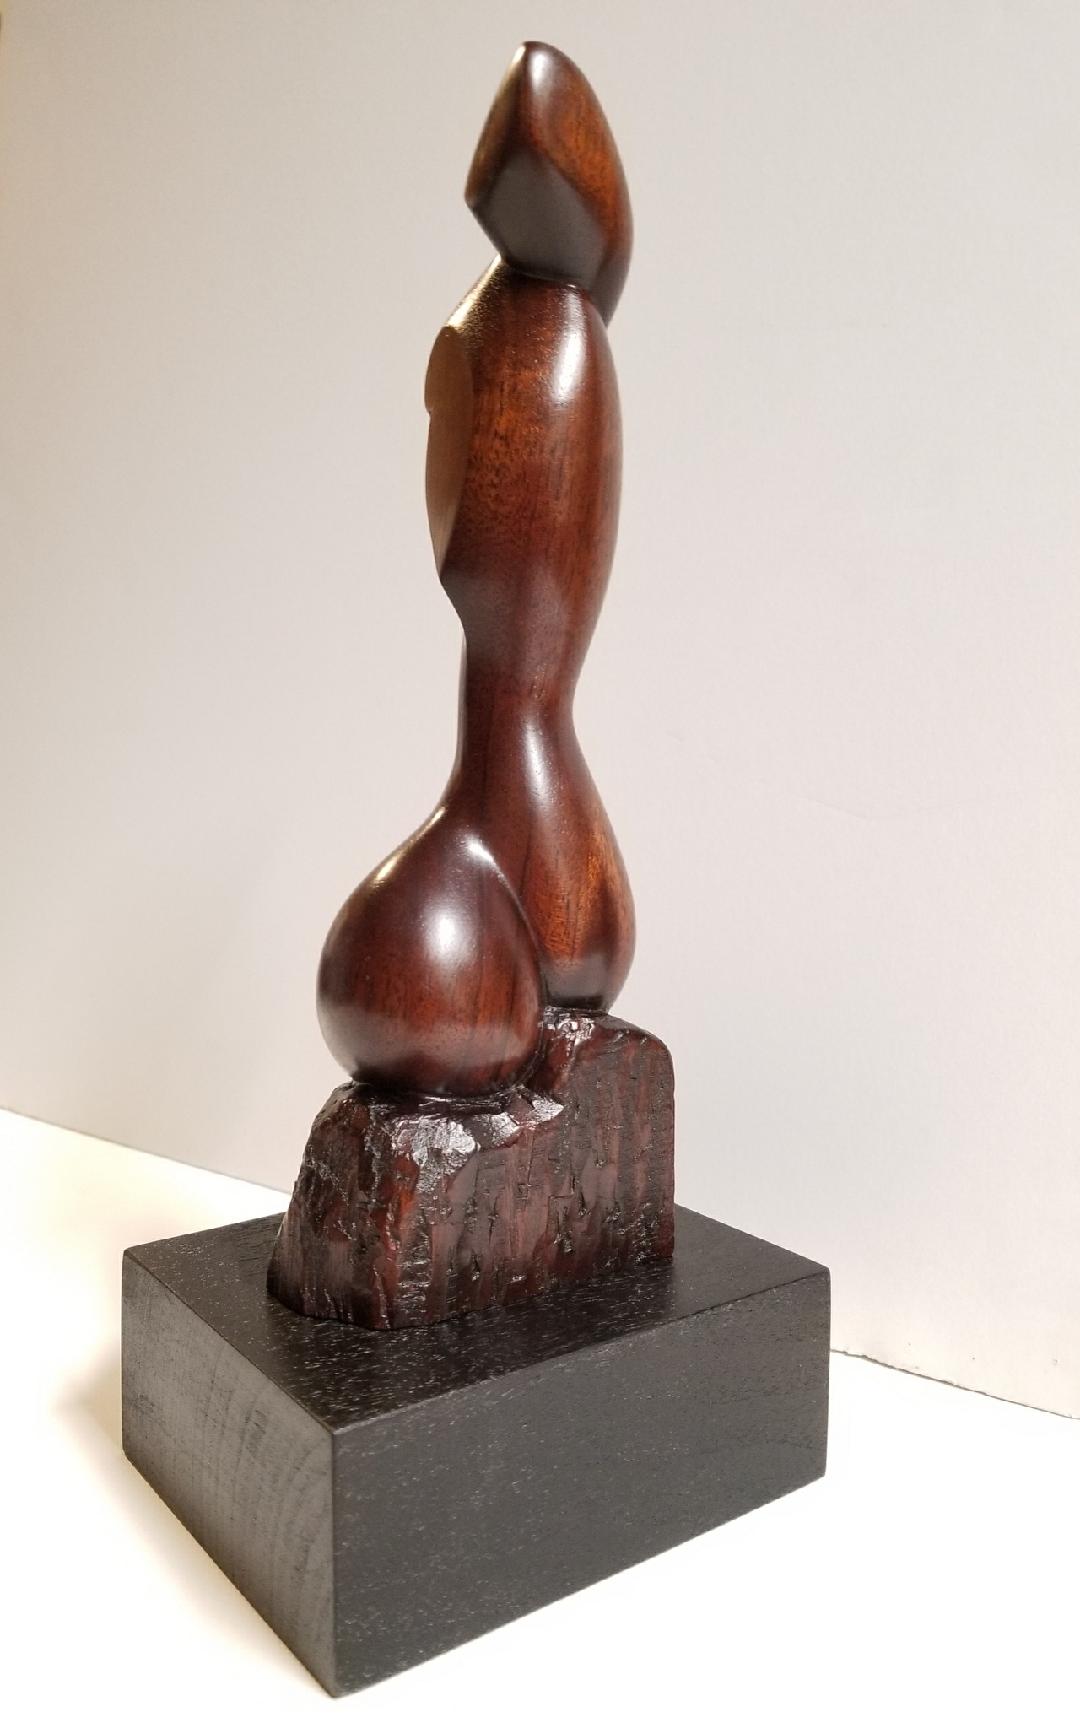 Randolph San Millan "Burdened" 12.5"hx5.5"wx3.75"d Sculpture Wood On A Wood Base